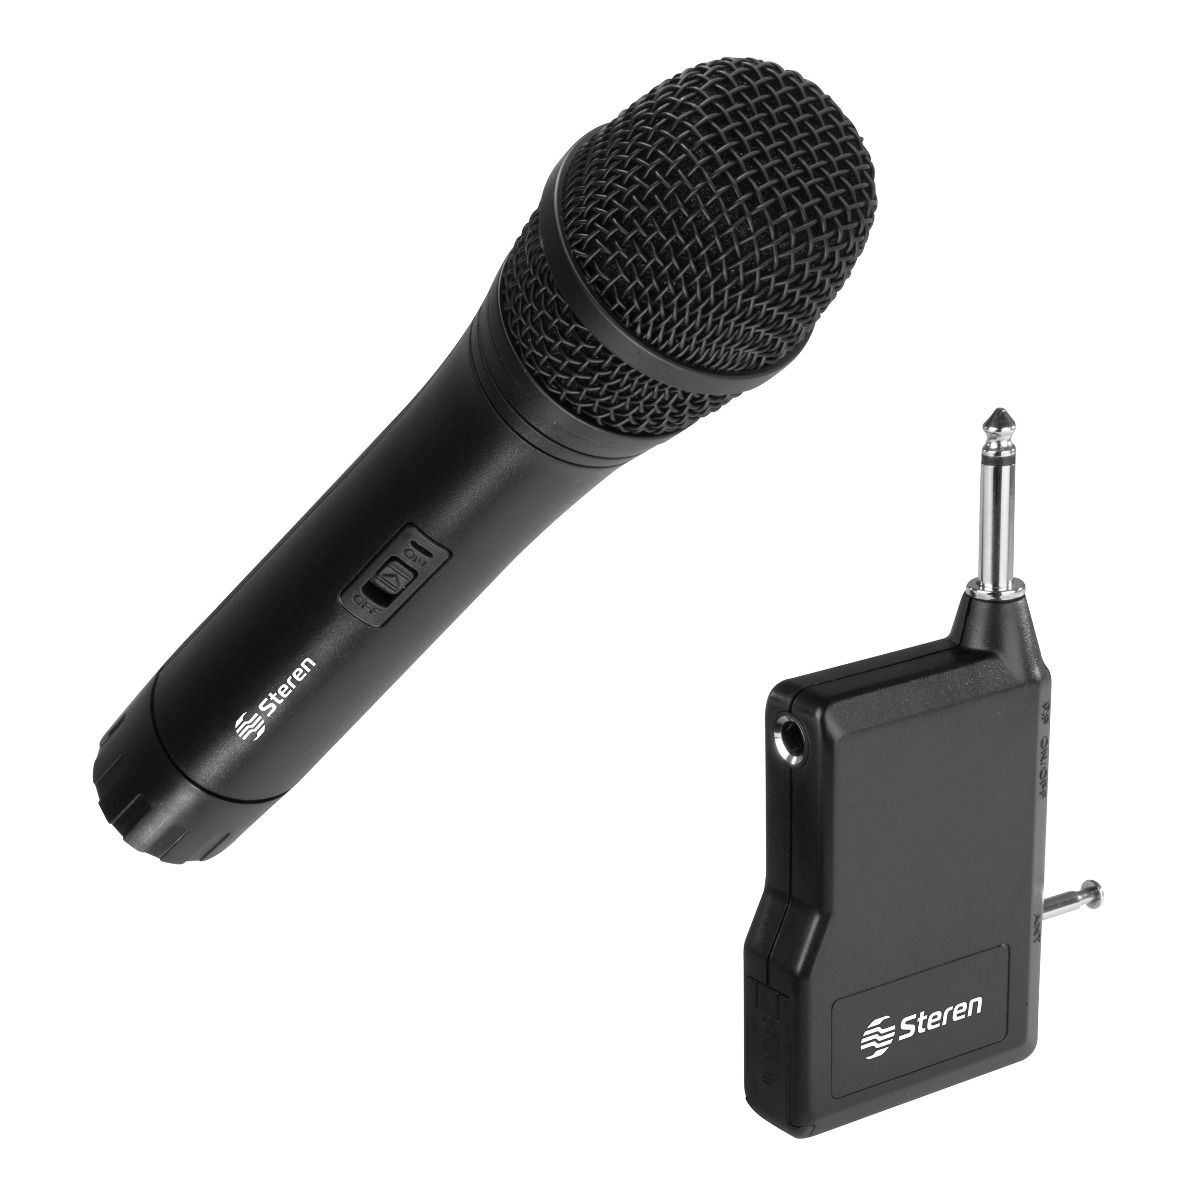  Micrófono inalámbrico con Bluetooth, sistema de